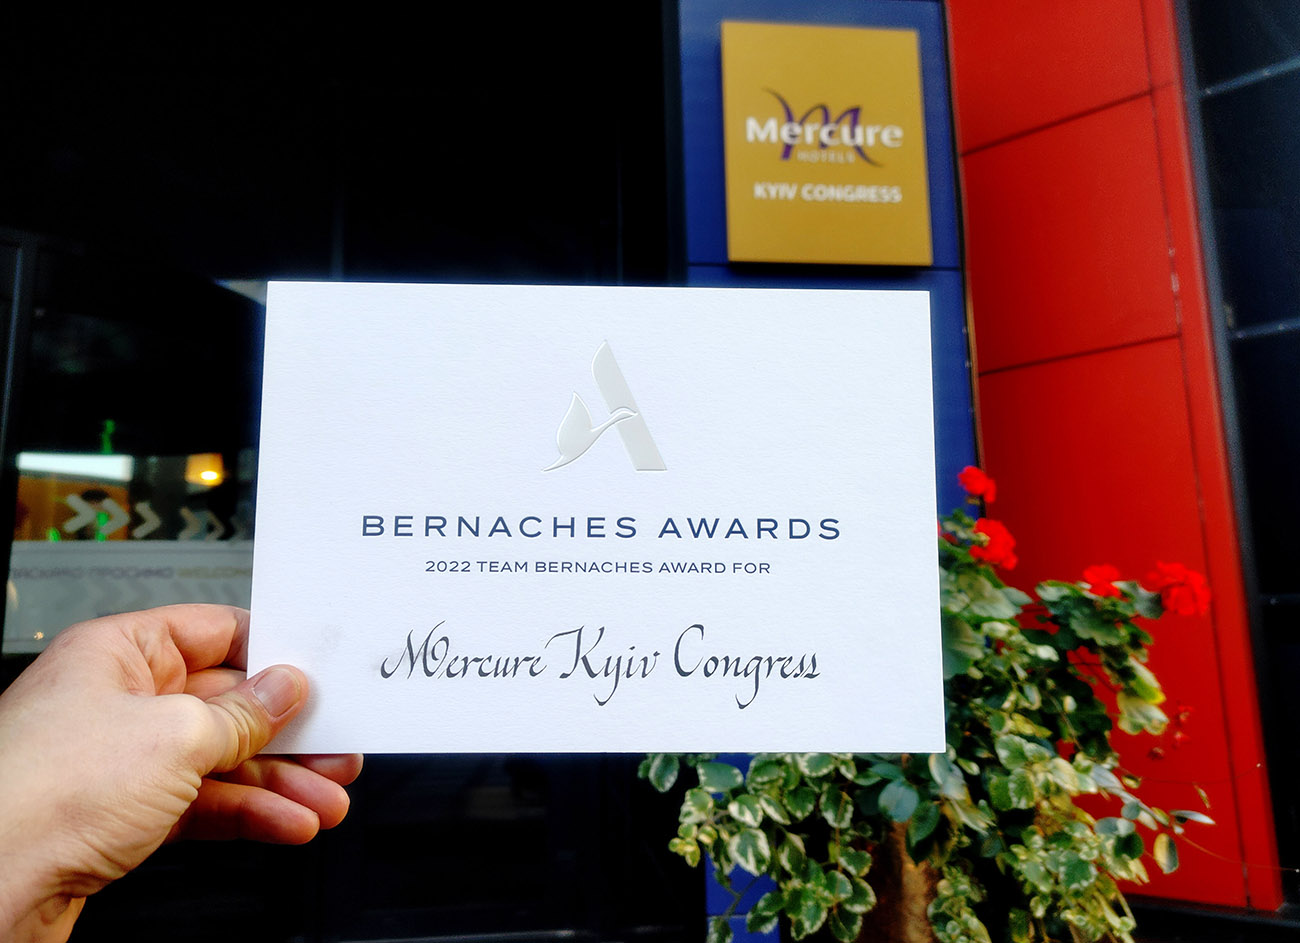 Mercure Kyiv Congress Hotel is a proud winner of Bernaches Awards!